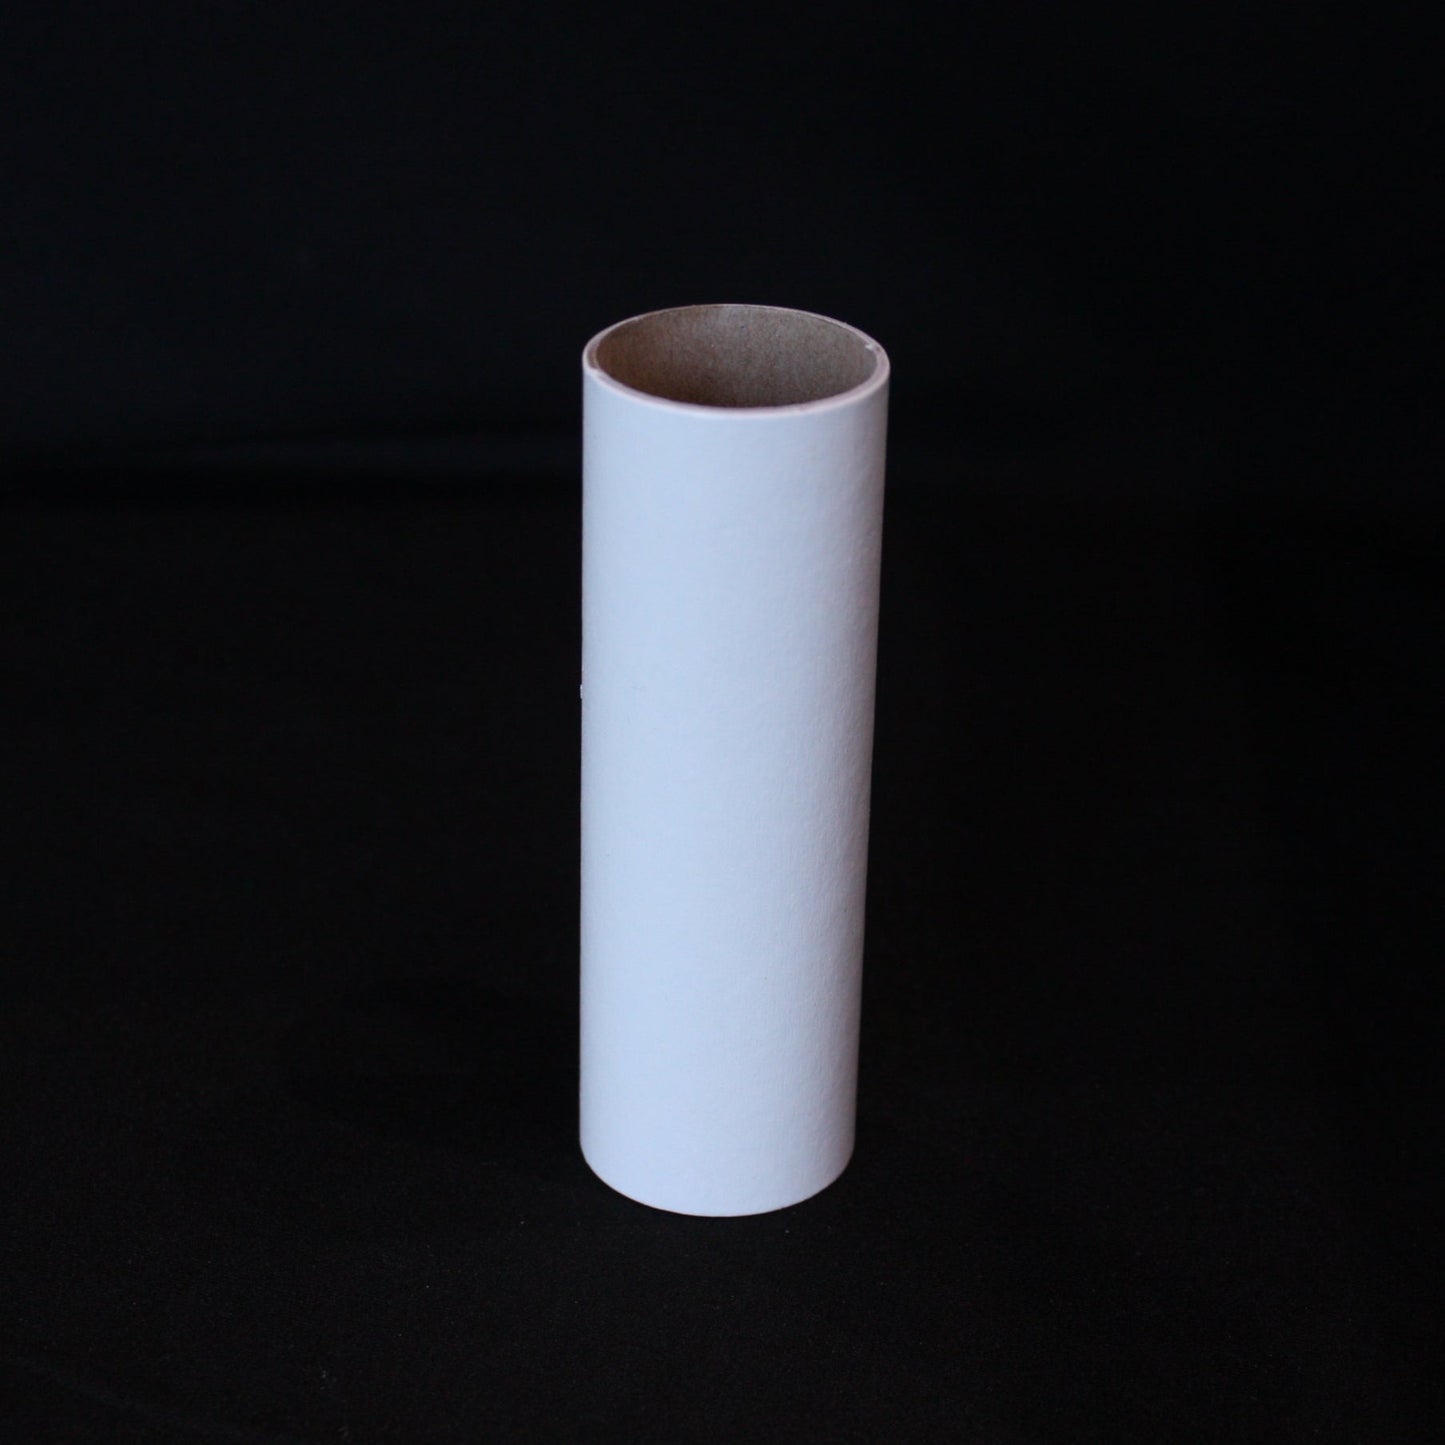 4" White Cardboard Candle Cover, Medium Base